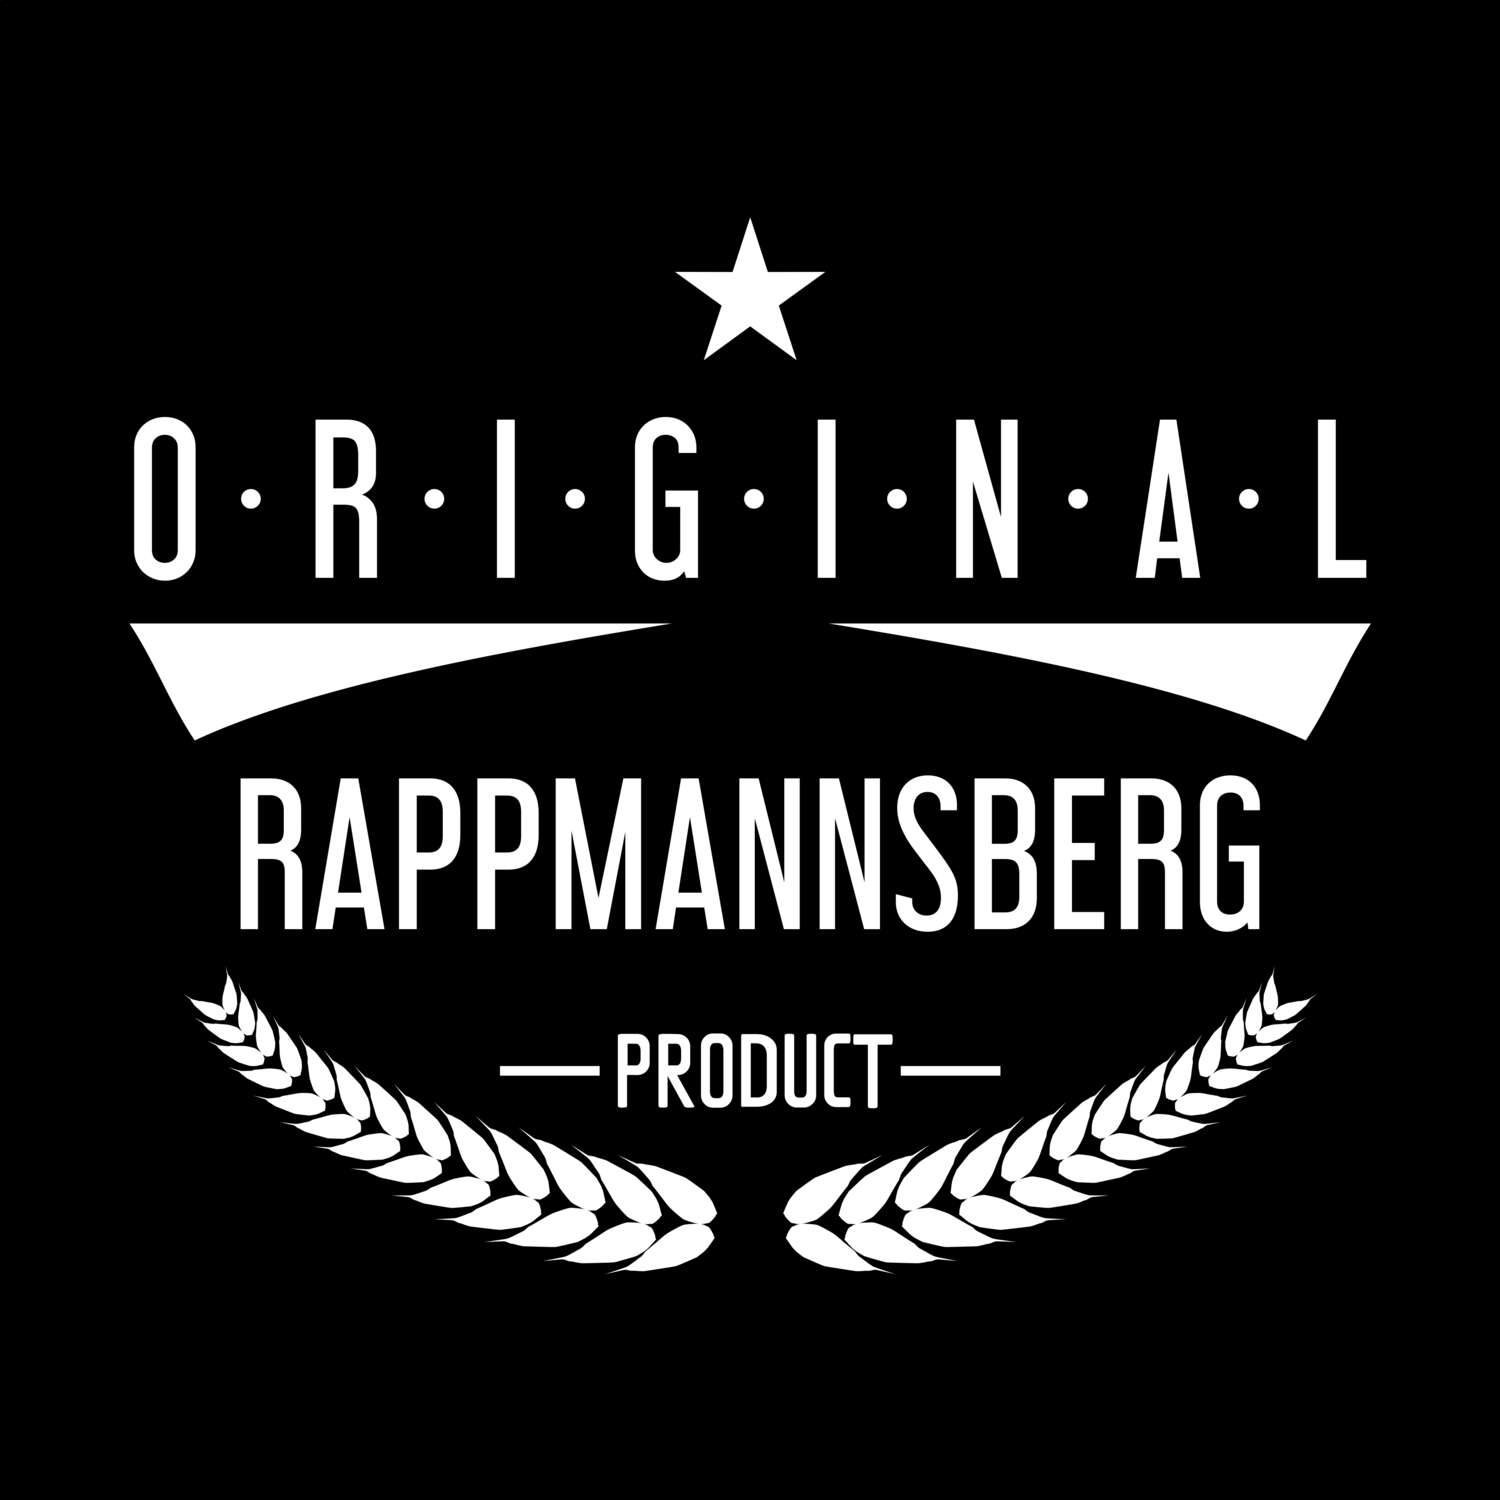 Rappmannsberg T-Shirt »Original Product«